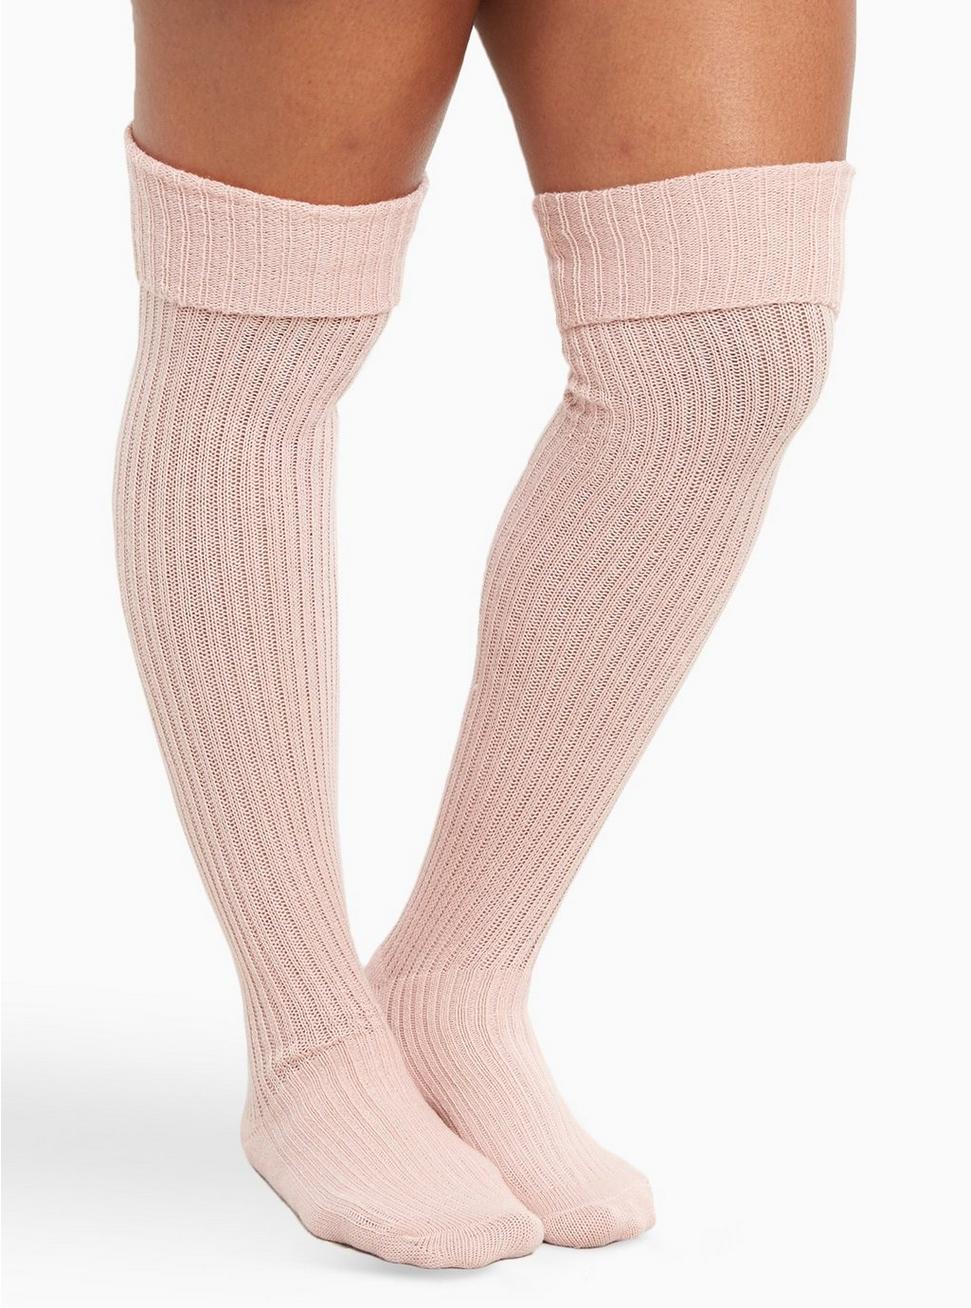 danielle cristine recommends torrid knee high socks pic